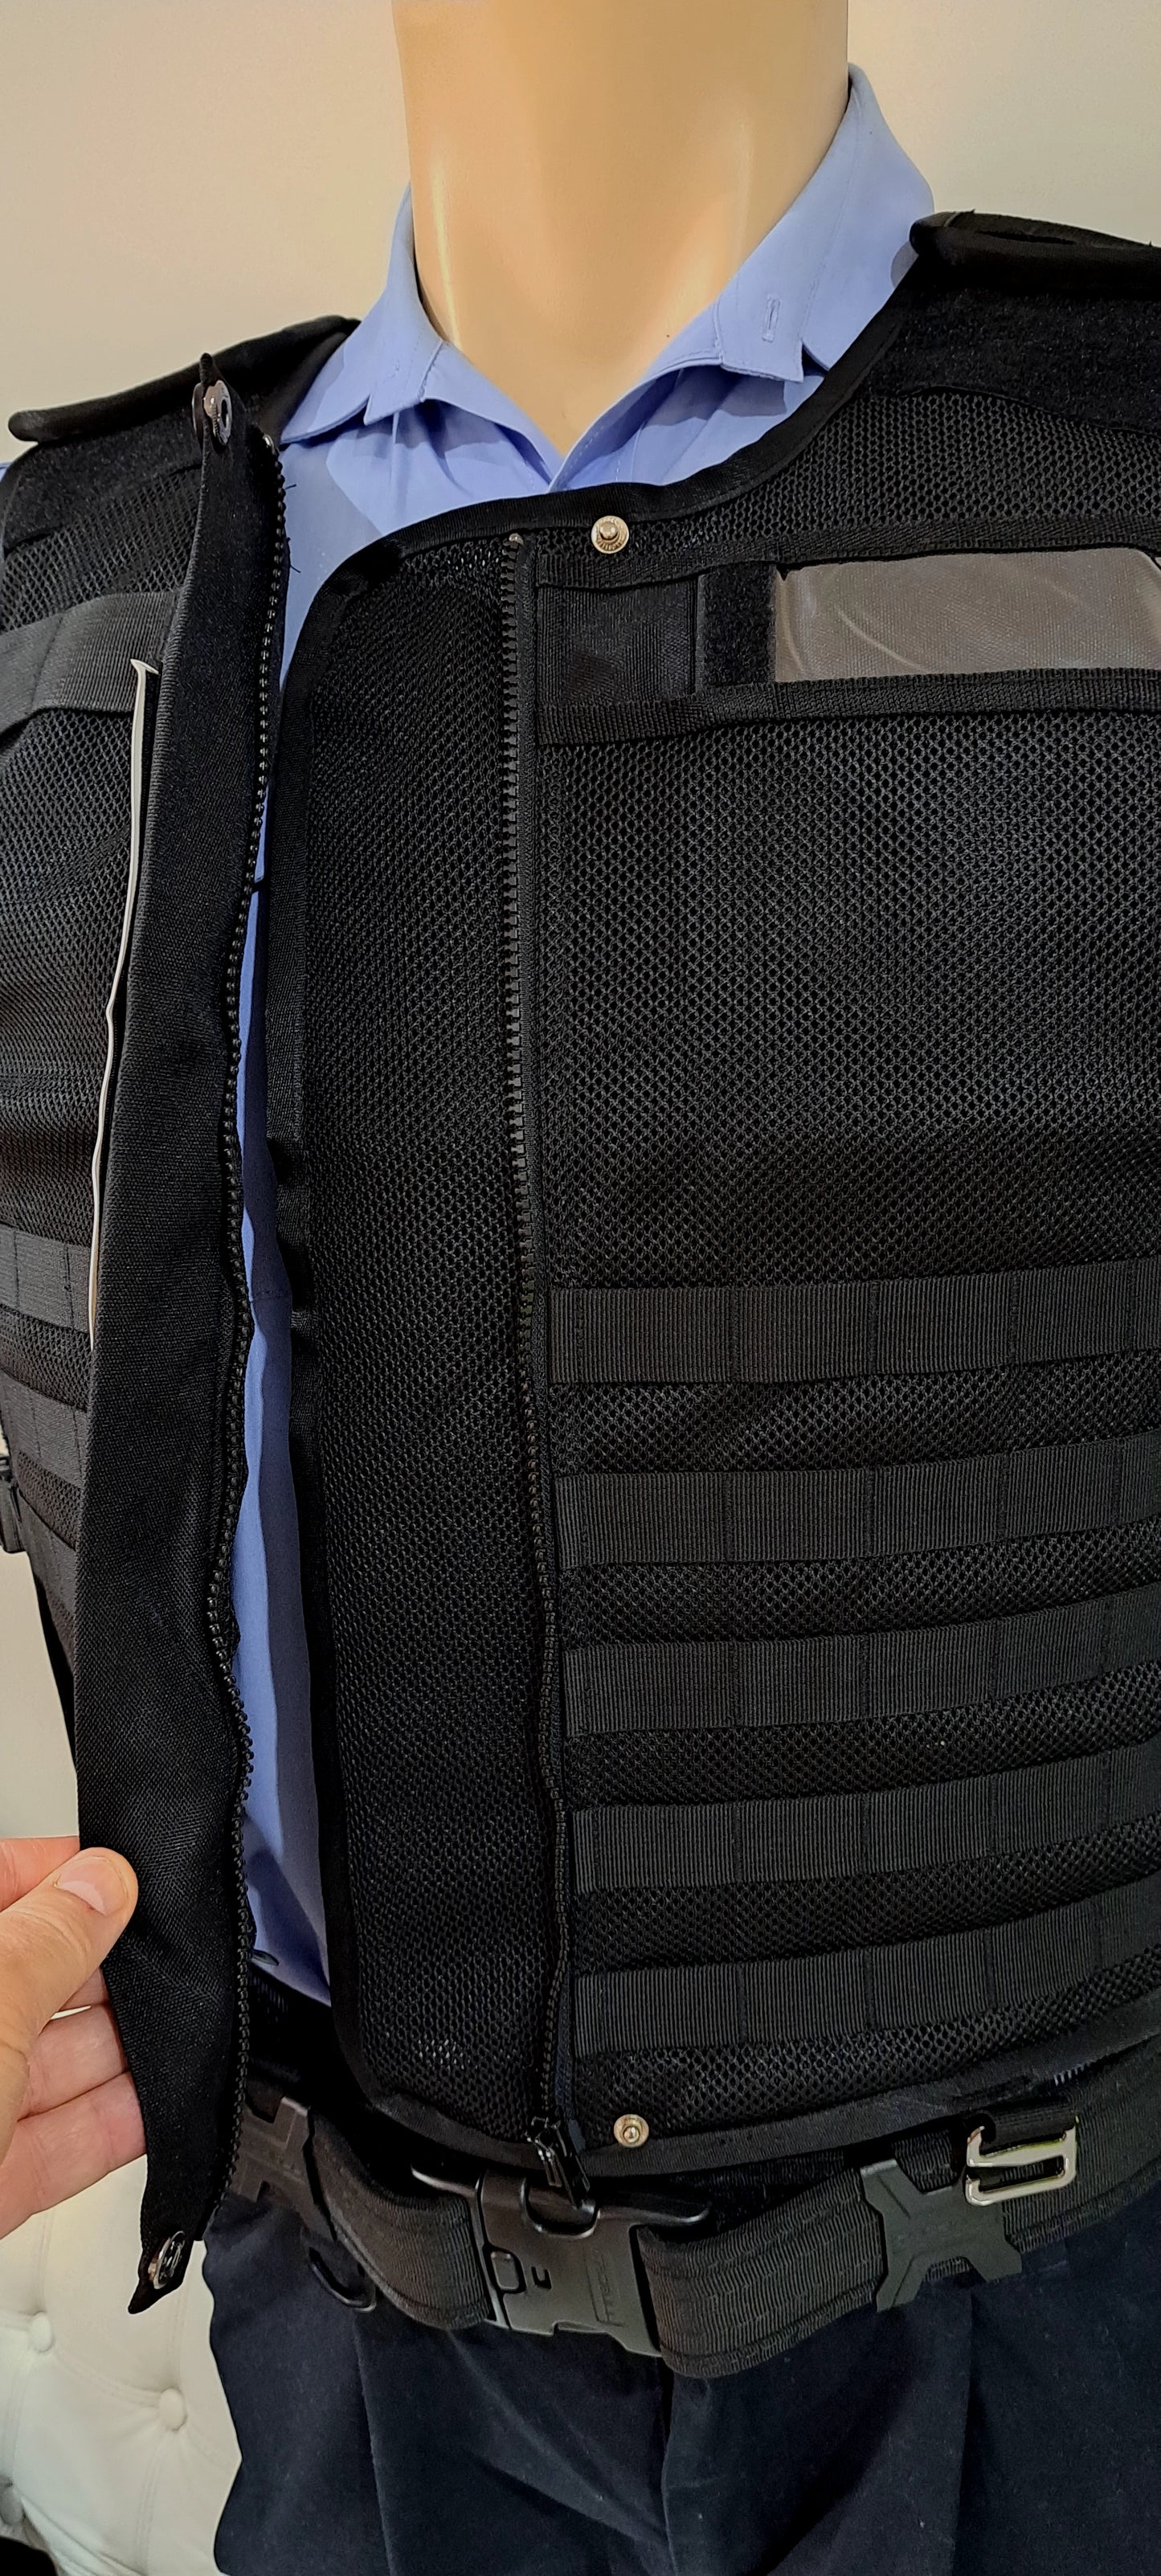 RESPONDER Stab Protection Vest